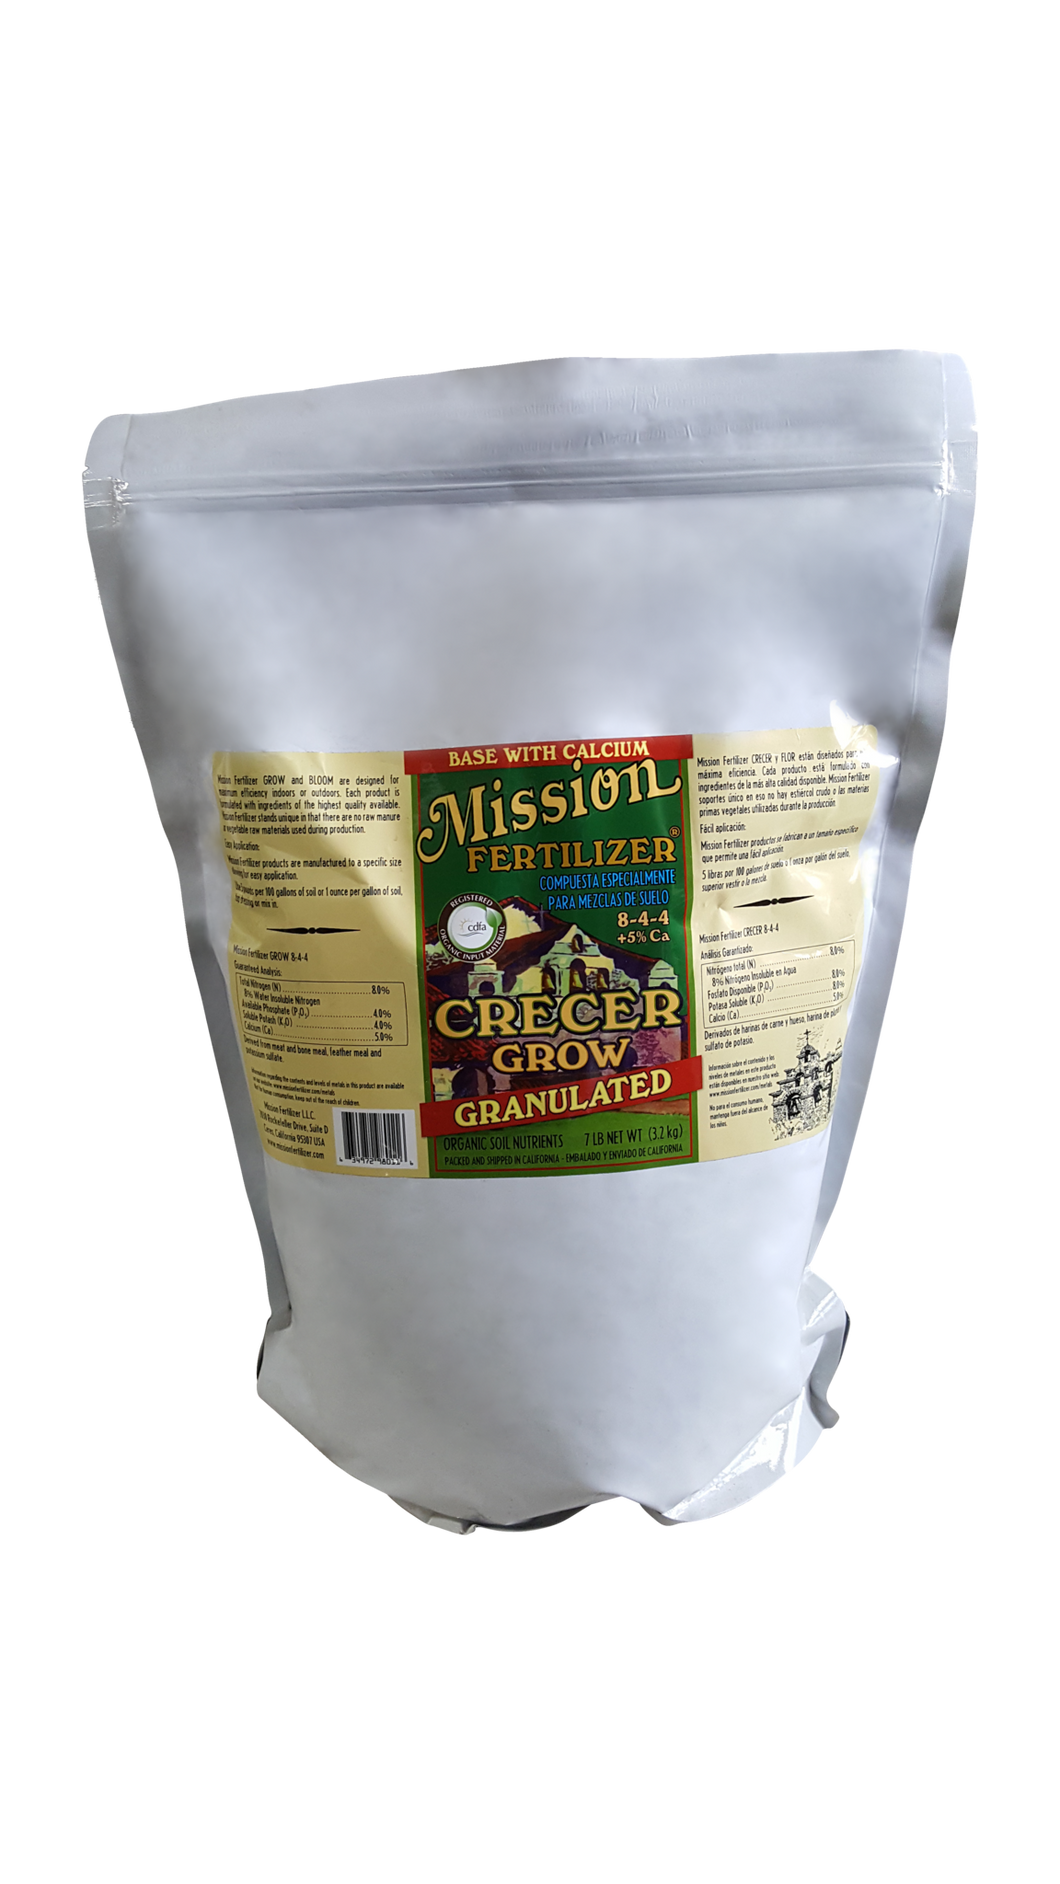 Mission GROW granular with Calcium (7 lb)